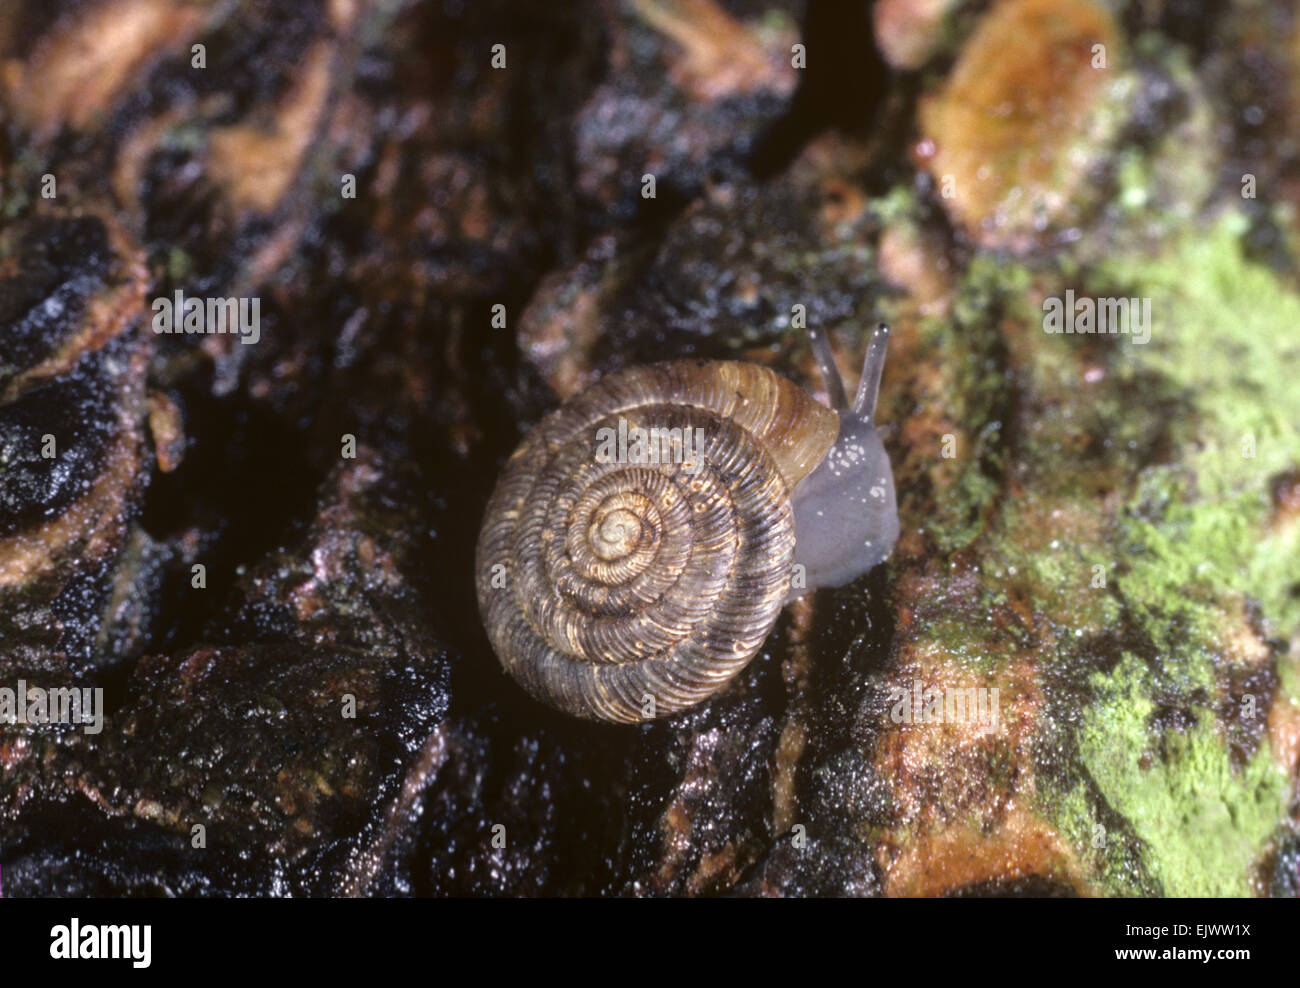 Rounded Snail - Discus rotundatus Stock Photo